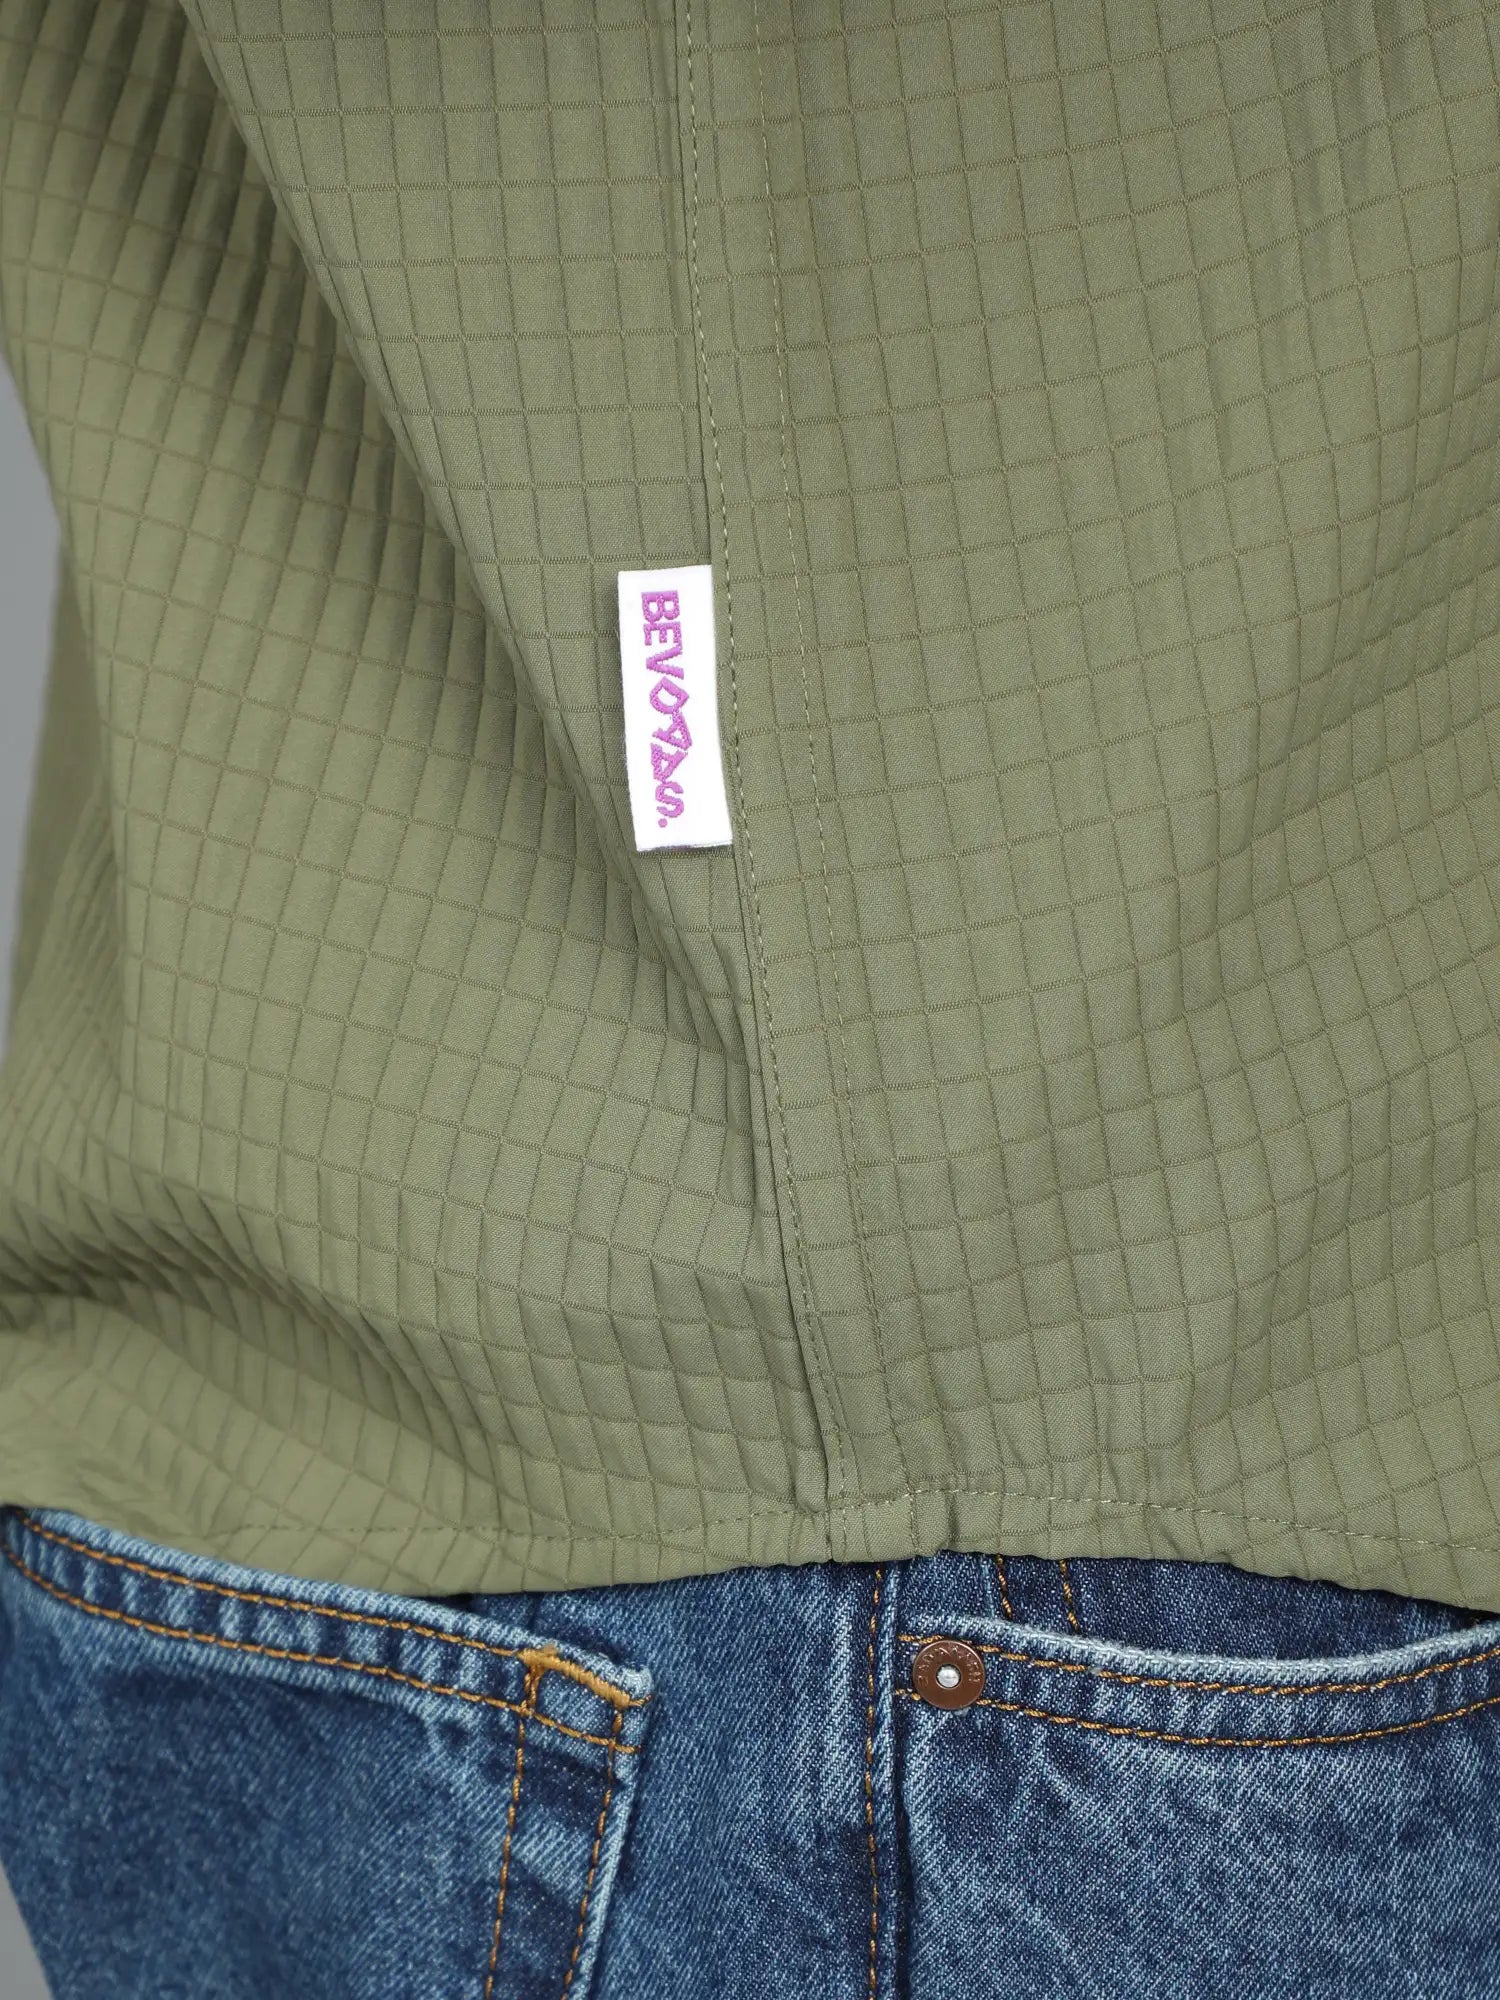 Stylish Sidekick Olive-Green Imported Drop Shoulder Shirt for Men 